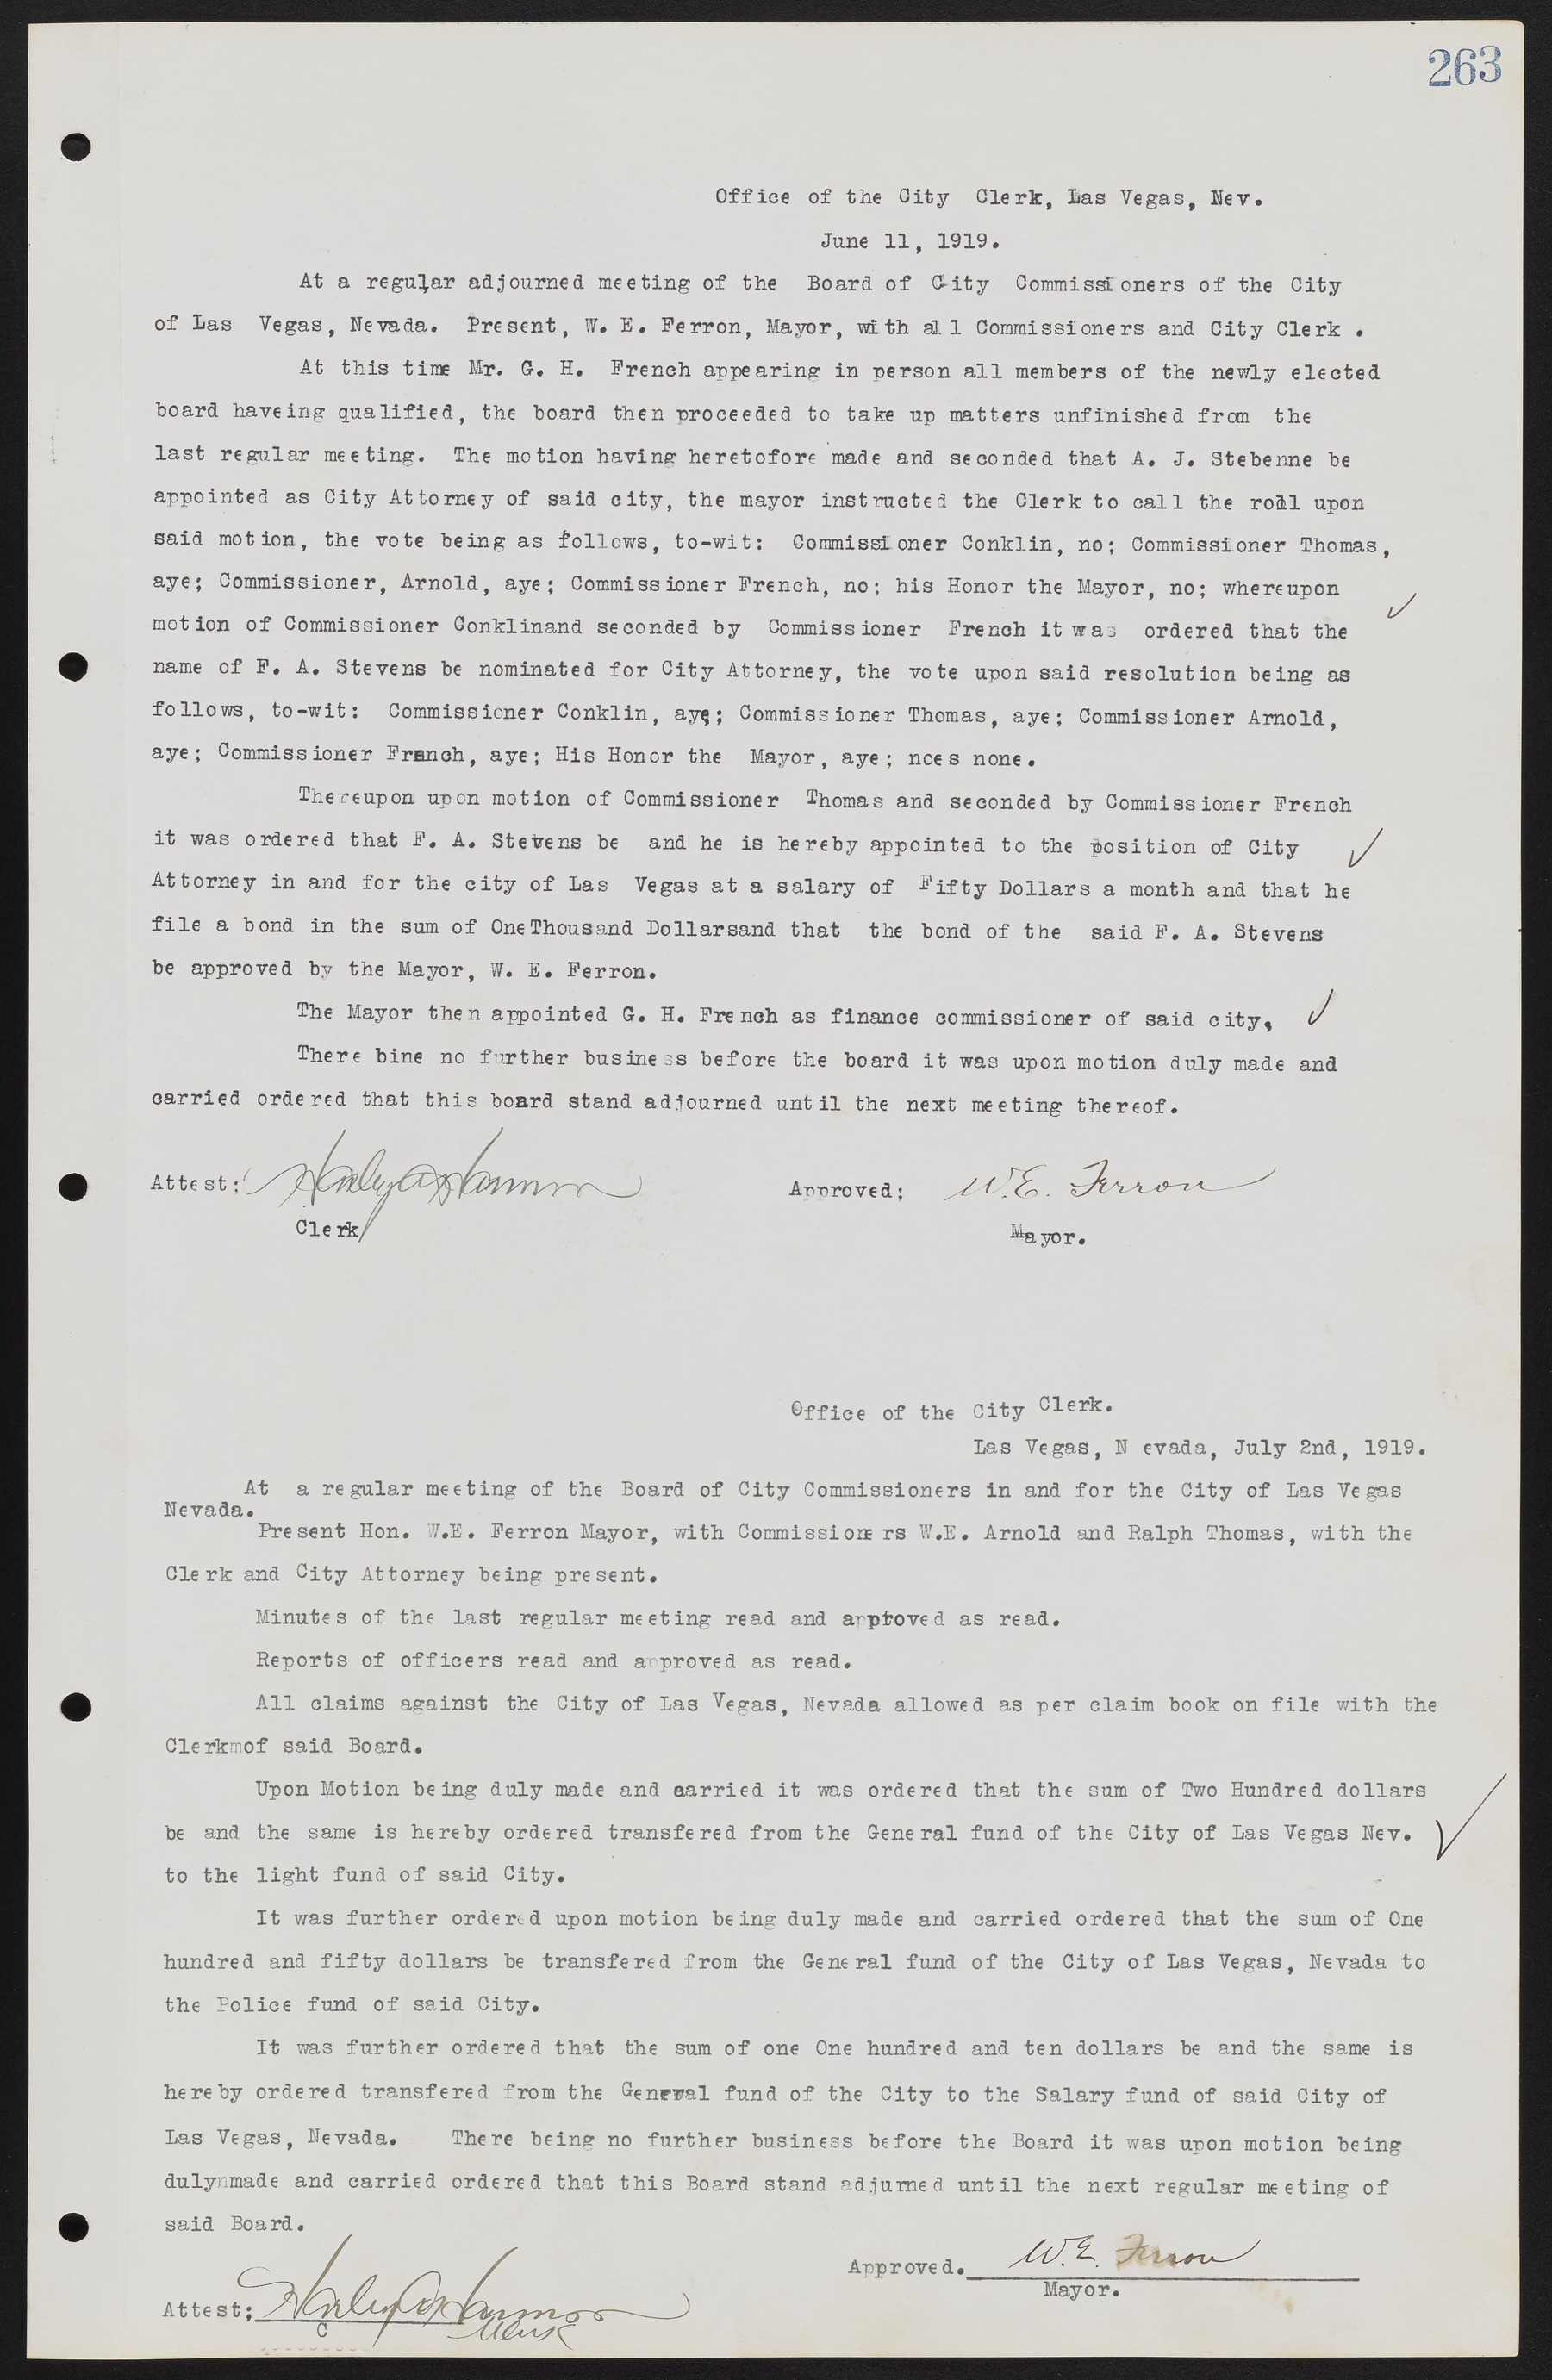 Las Vegas City Commission Minutes, June 22, 1911 to February 7, 1922, lvc000001-279